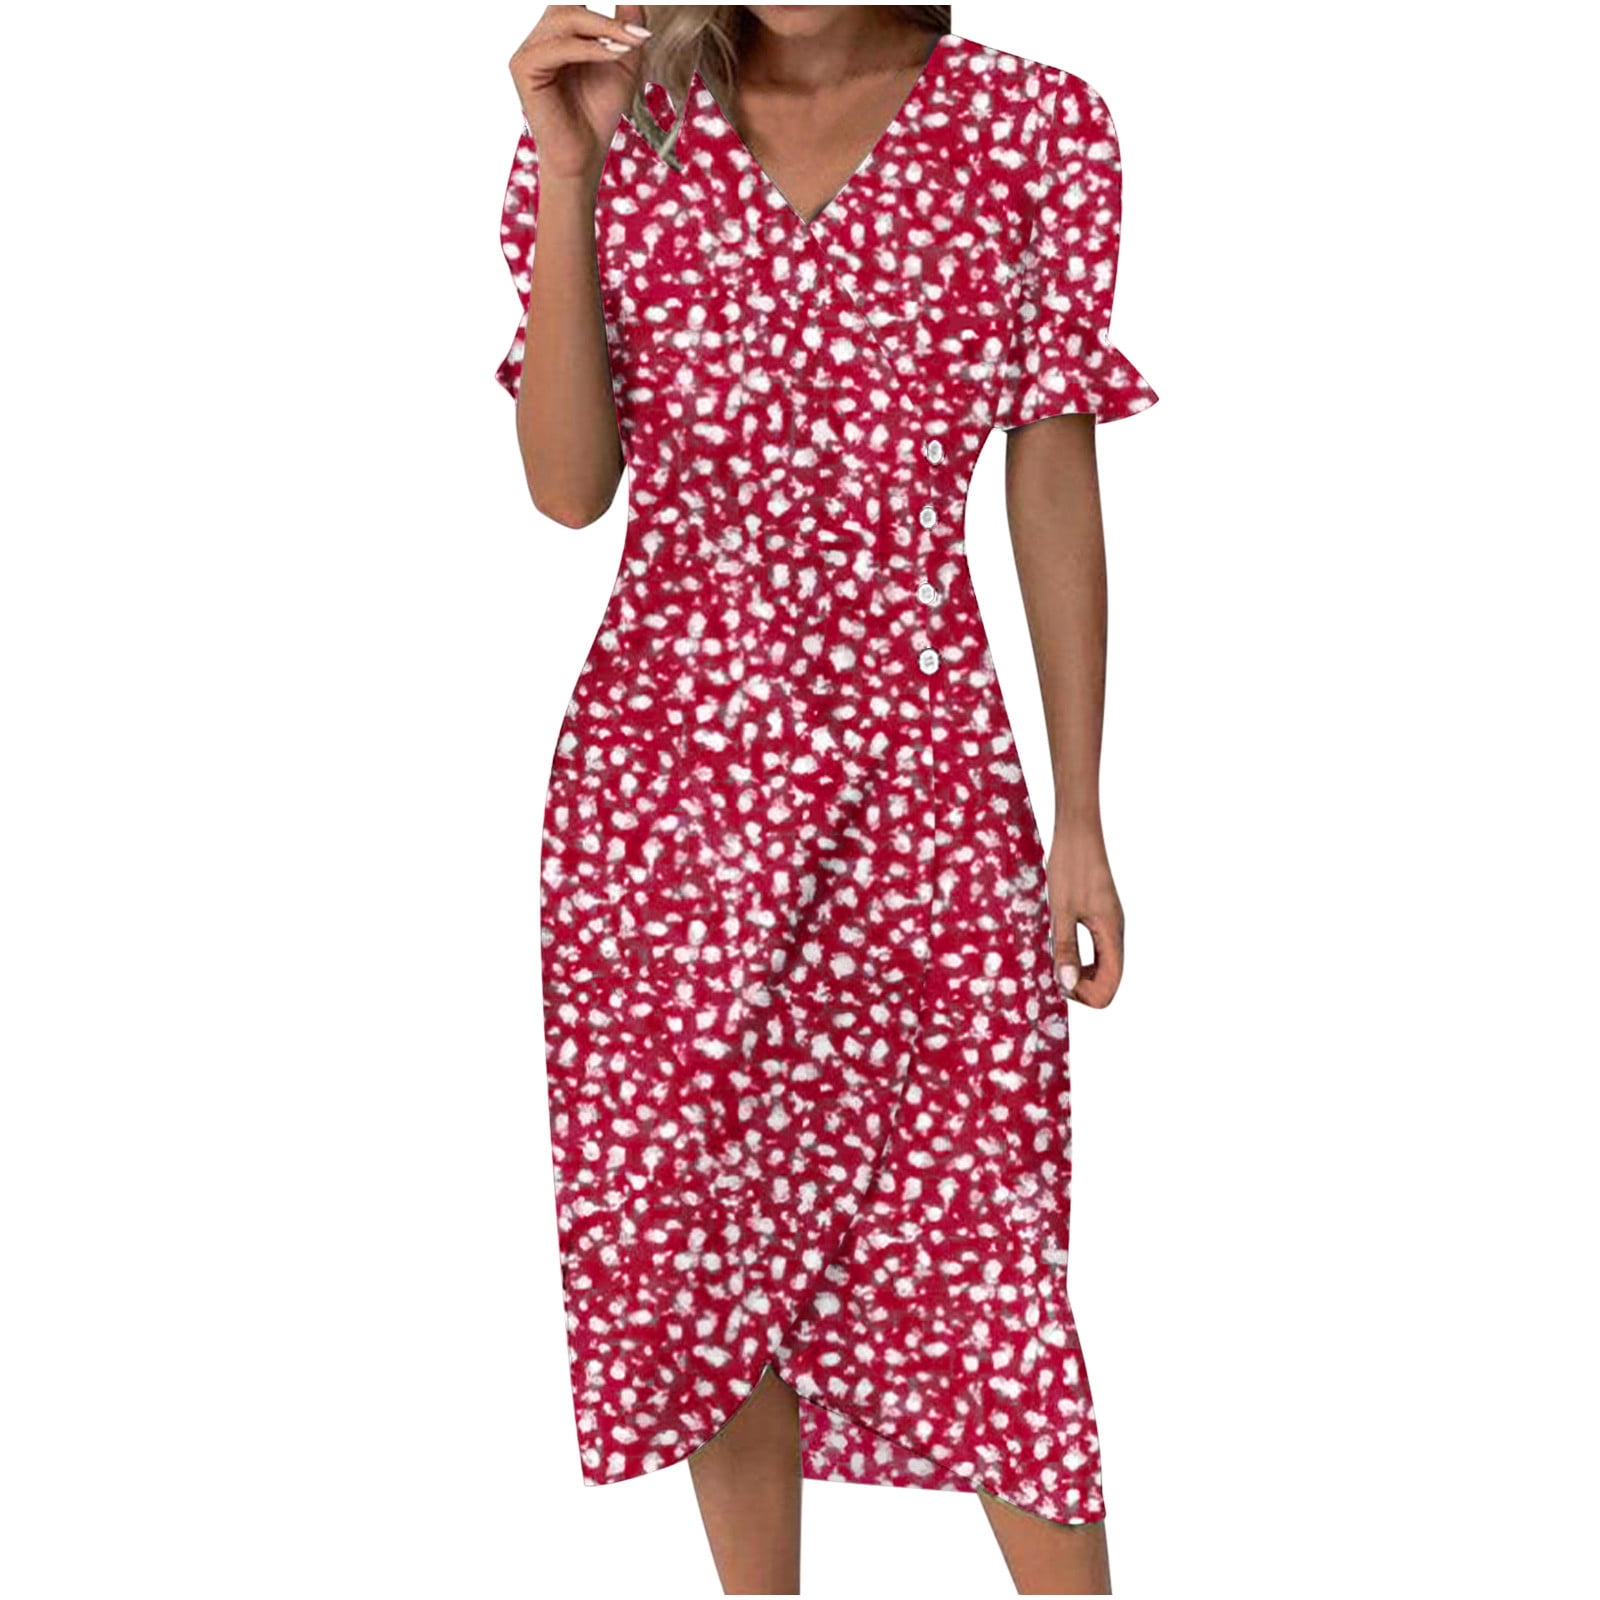 VSSSJ Summer Casual Dresses for Women Floral Print Button Front Elegant ...